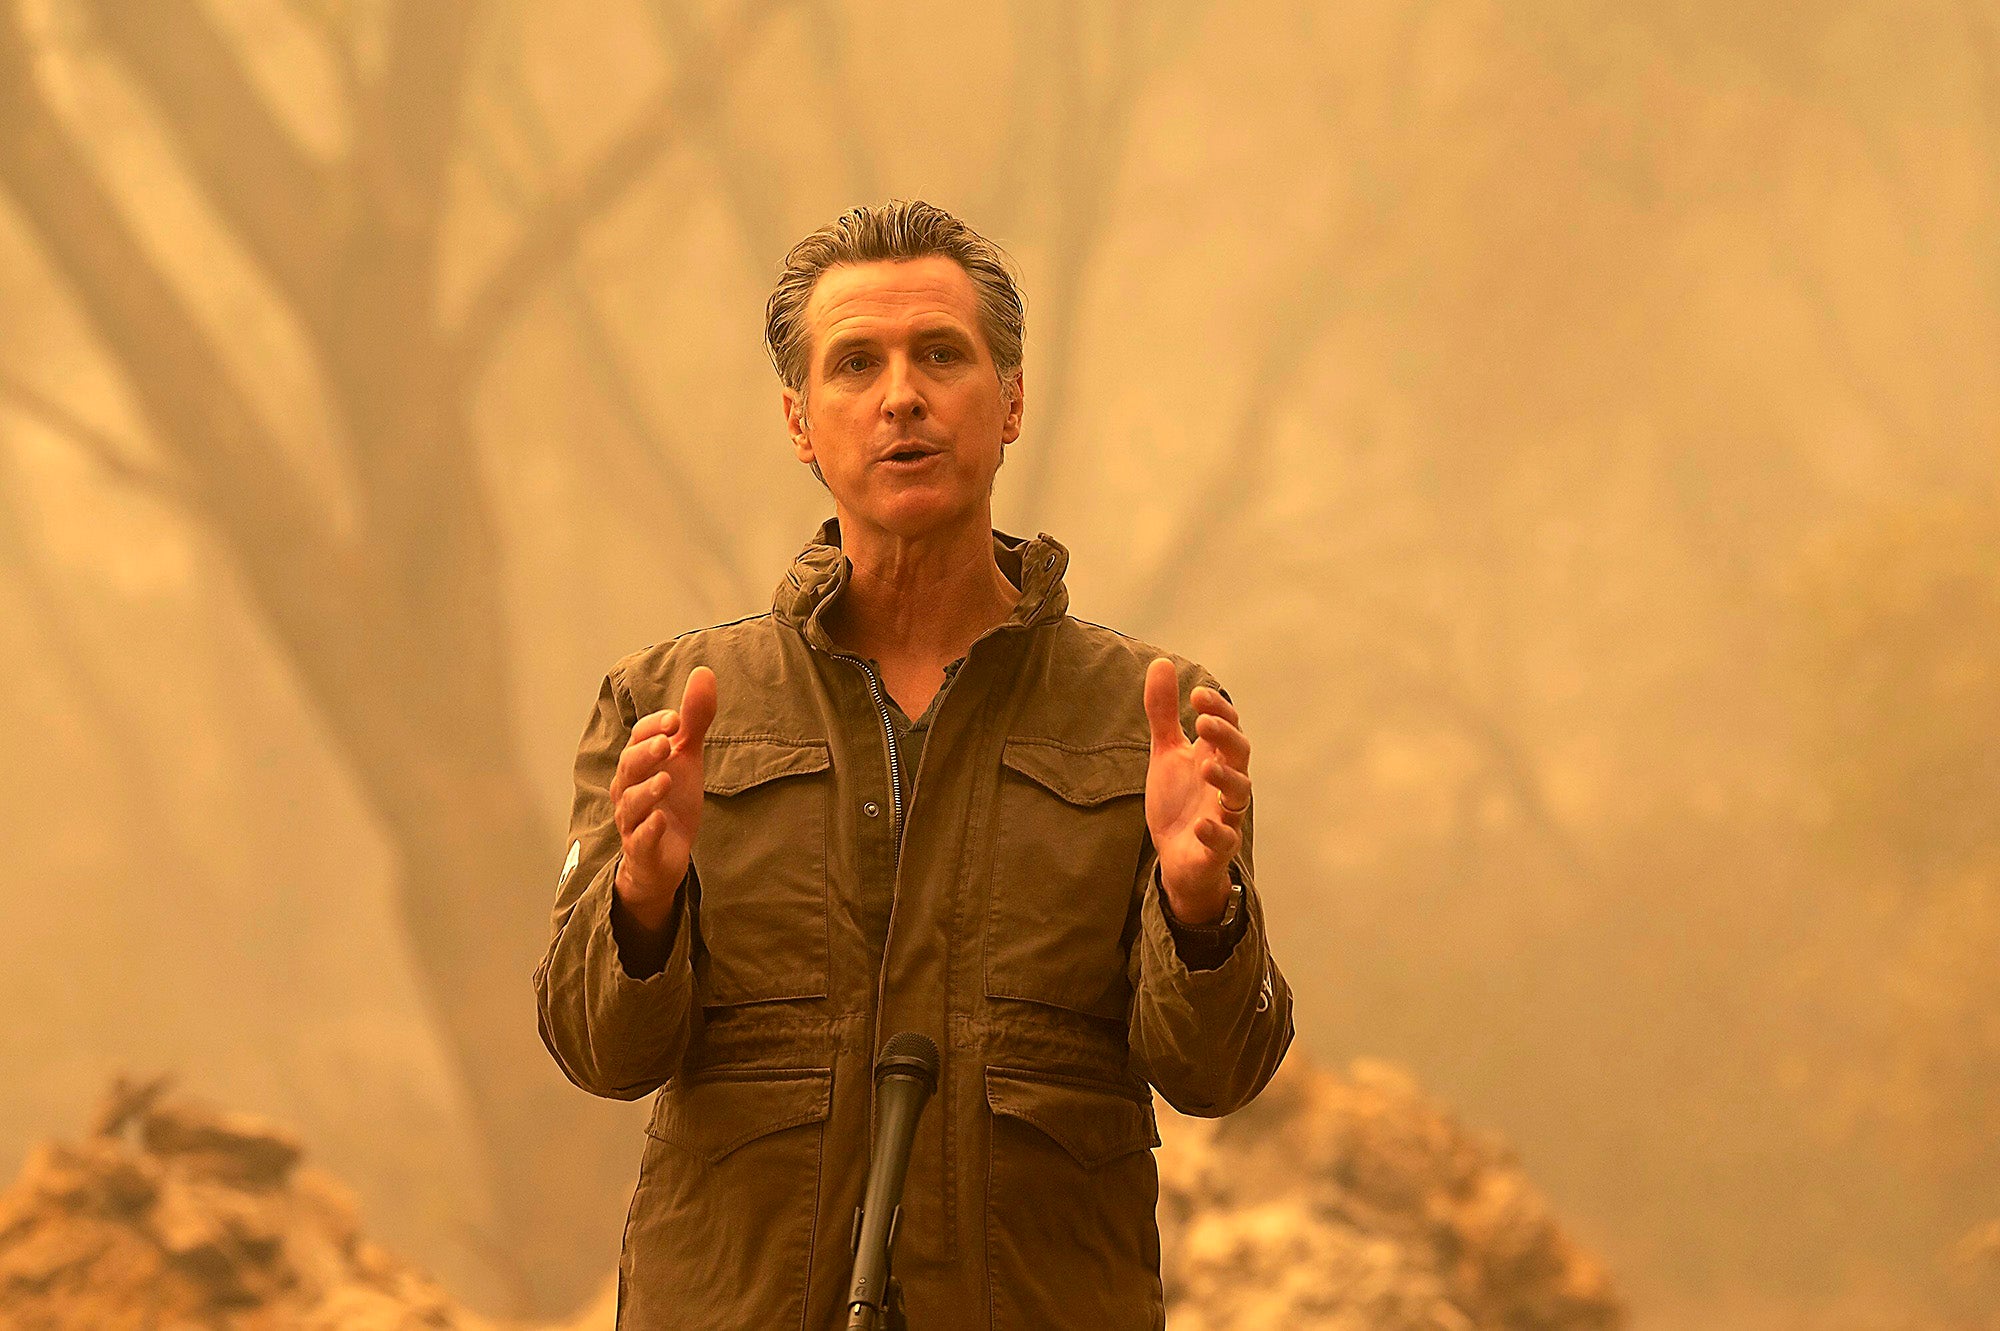 Gavin Newsom speaking in a burned and smokey area.